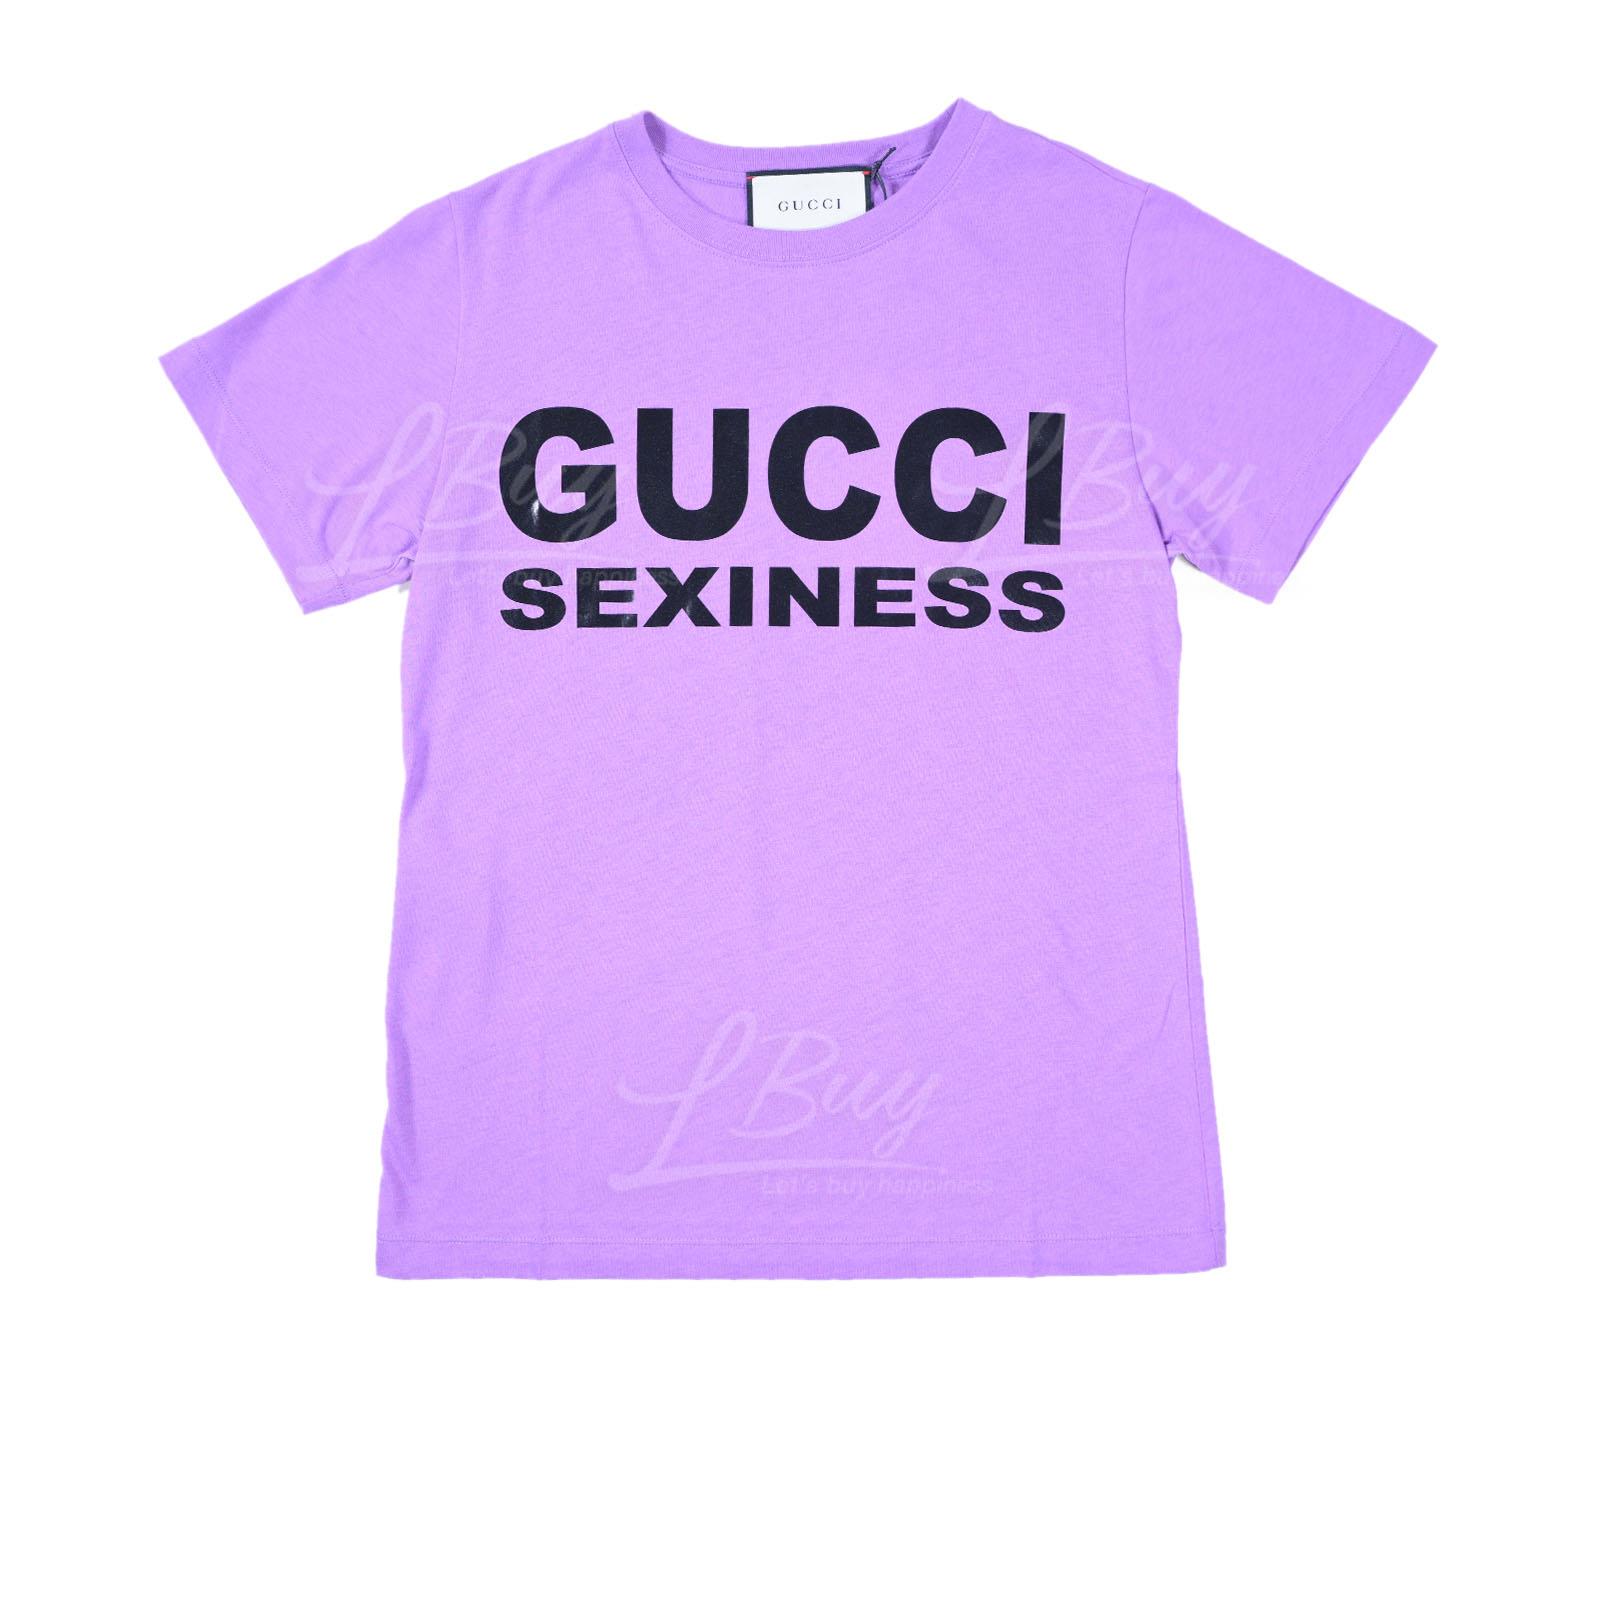 Gucci Sexiness Short Sleeve T-Shirt Purple